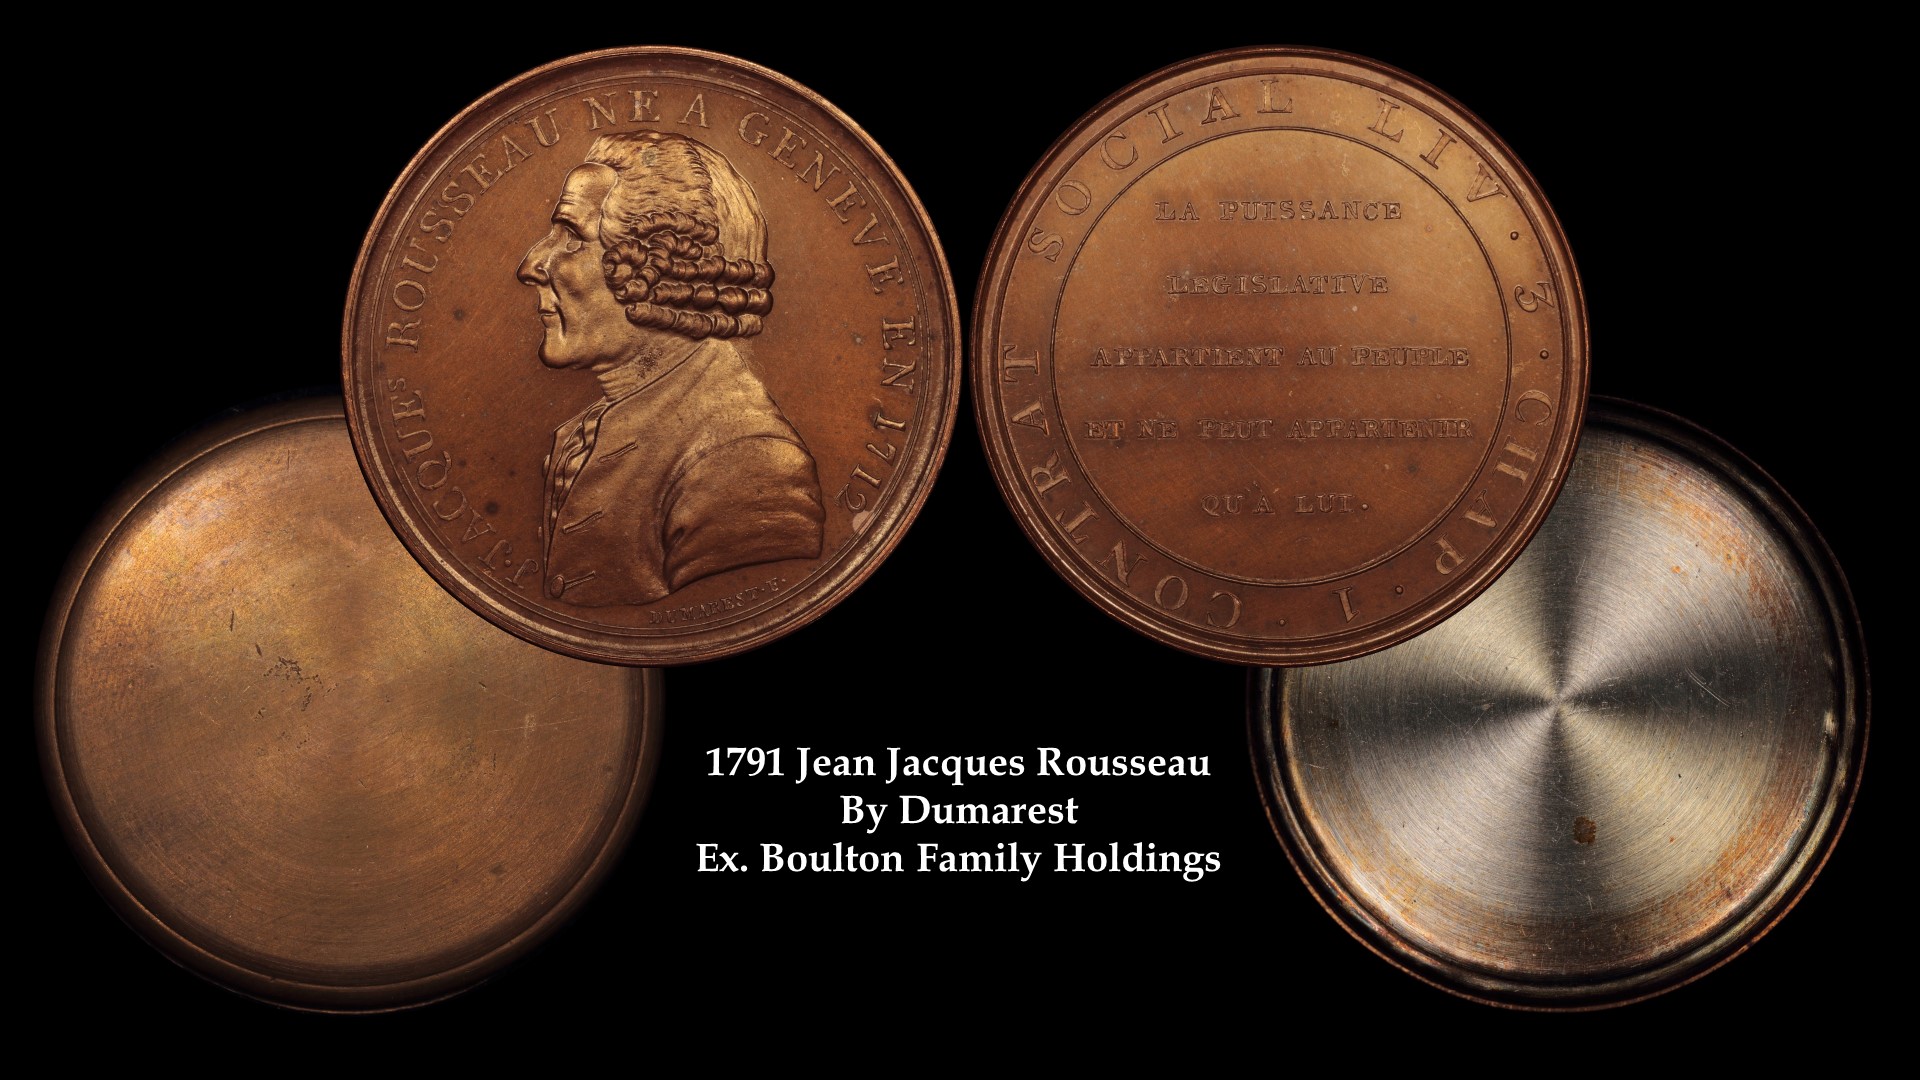 1791 Jean Jacques Rousseau Medal By Dumerest Ex. Boulton Family Holdings.jpg